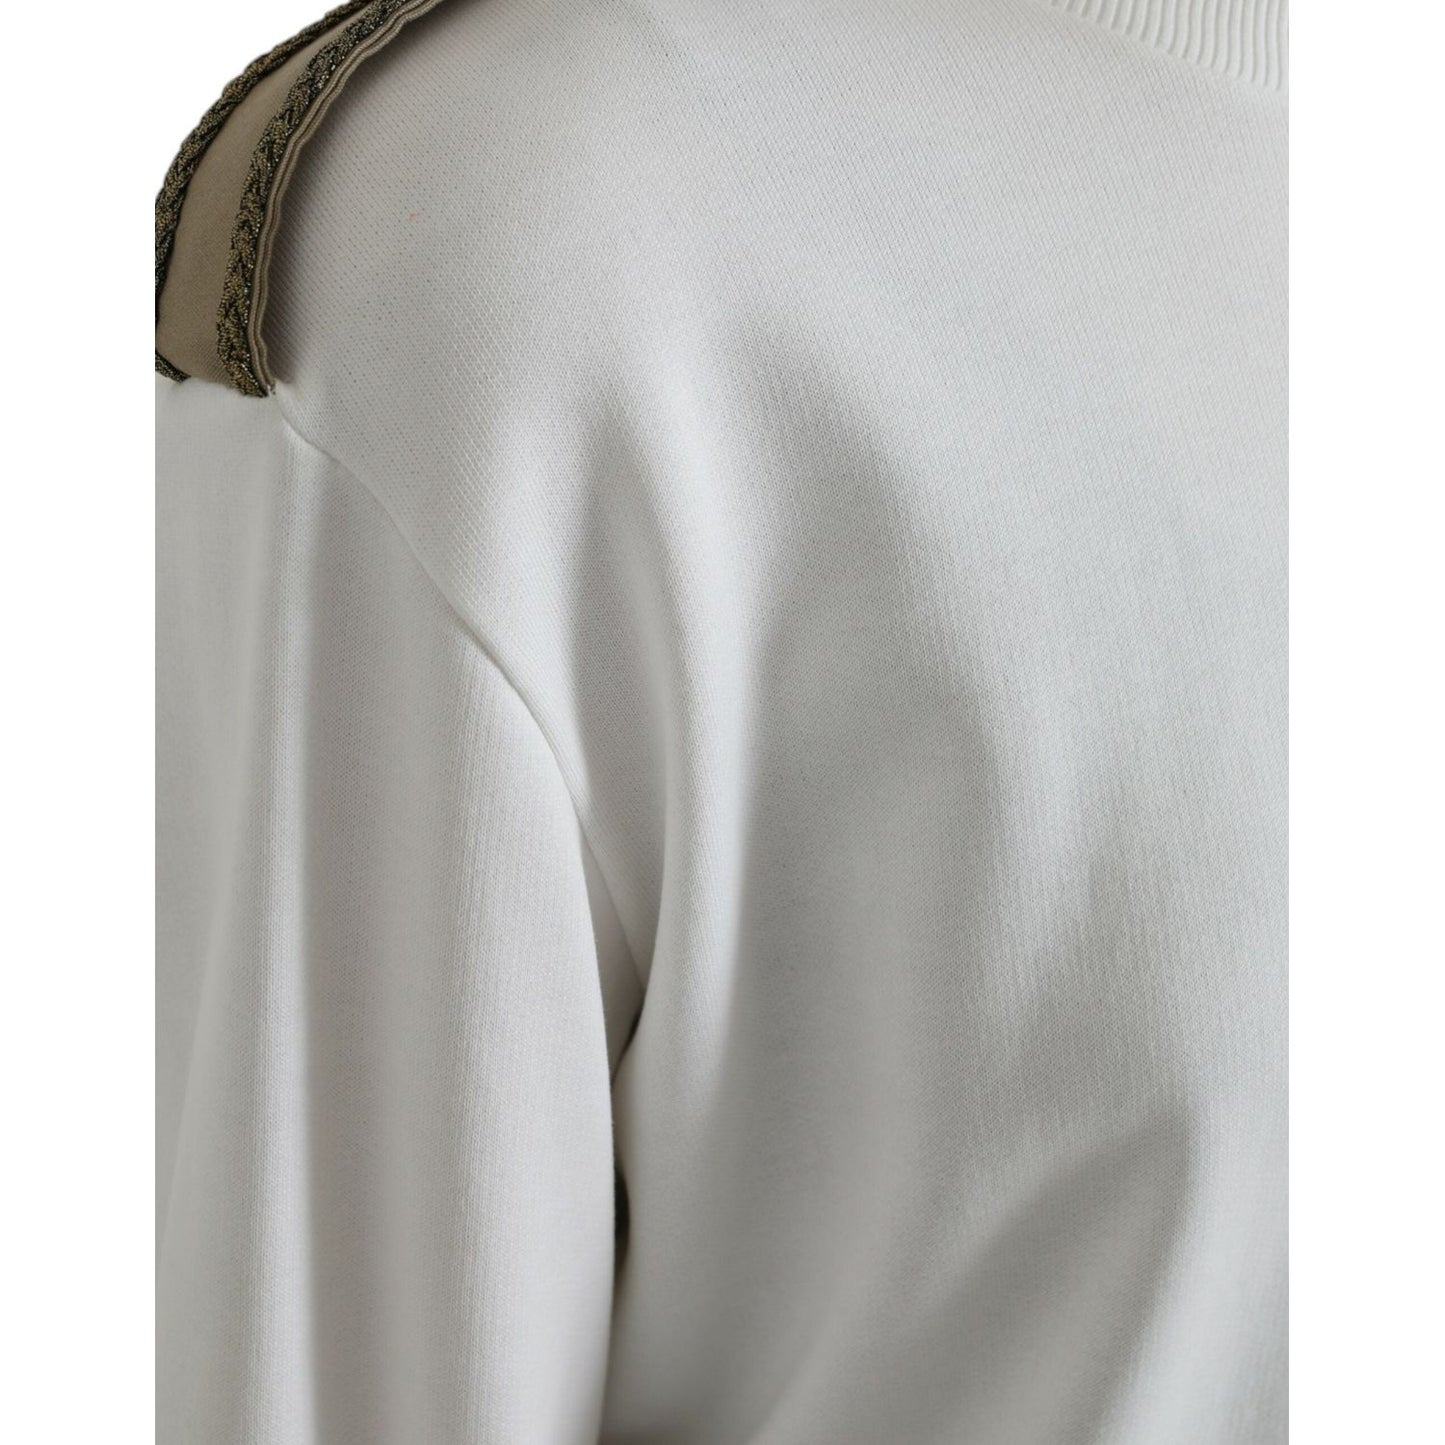 Dolce & Gabbana Chic Black and White Crew Neck Sweater chic-black-and-white-crew-neck-sweater